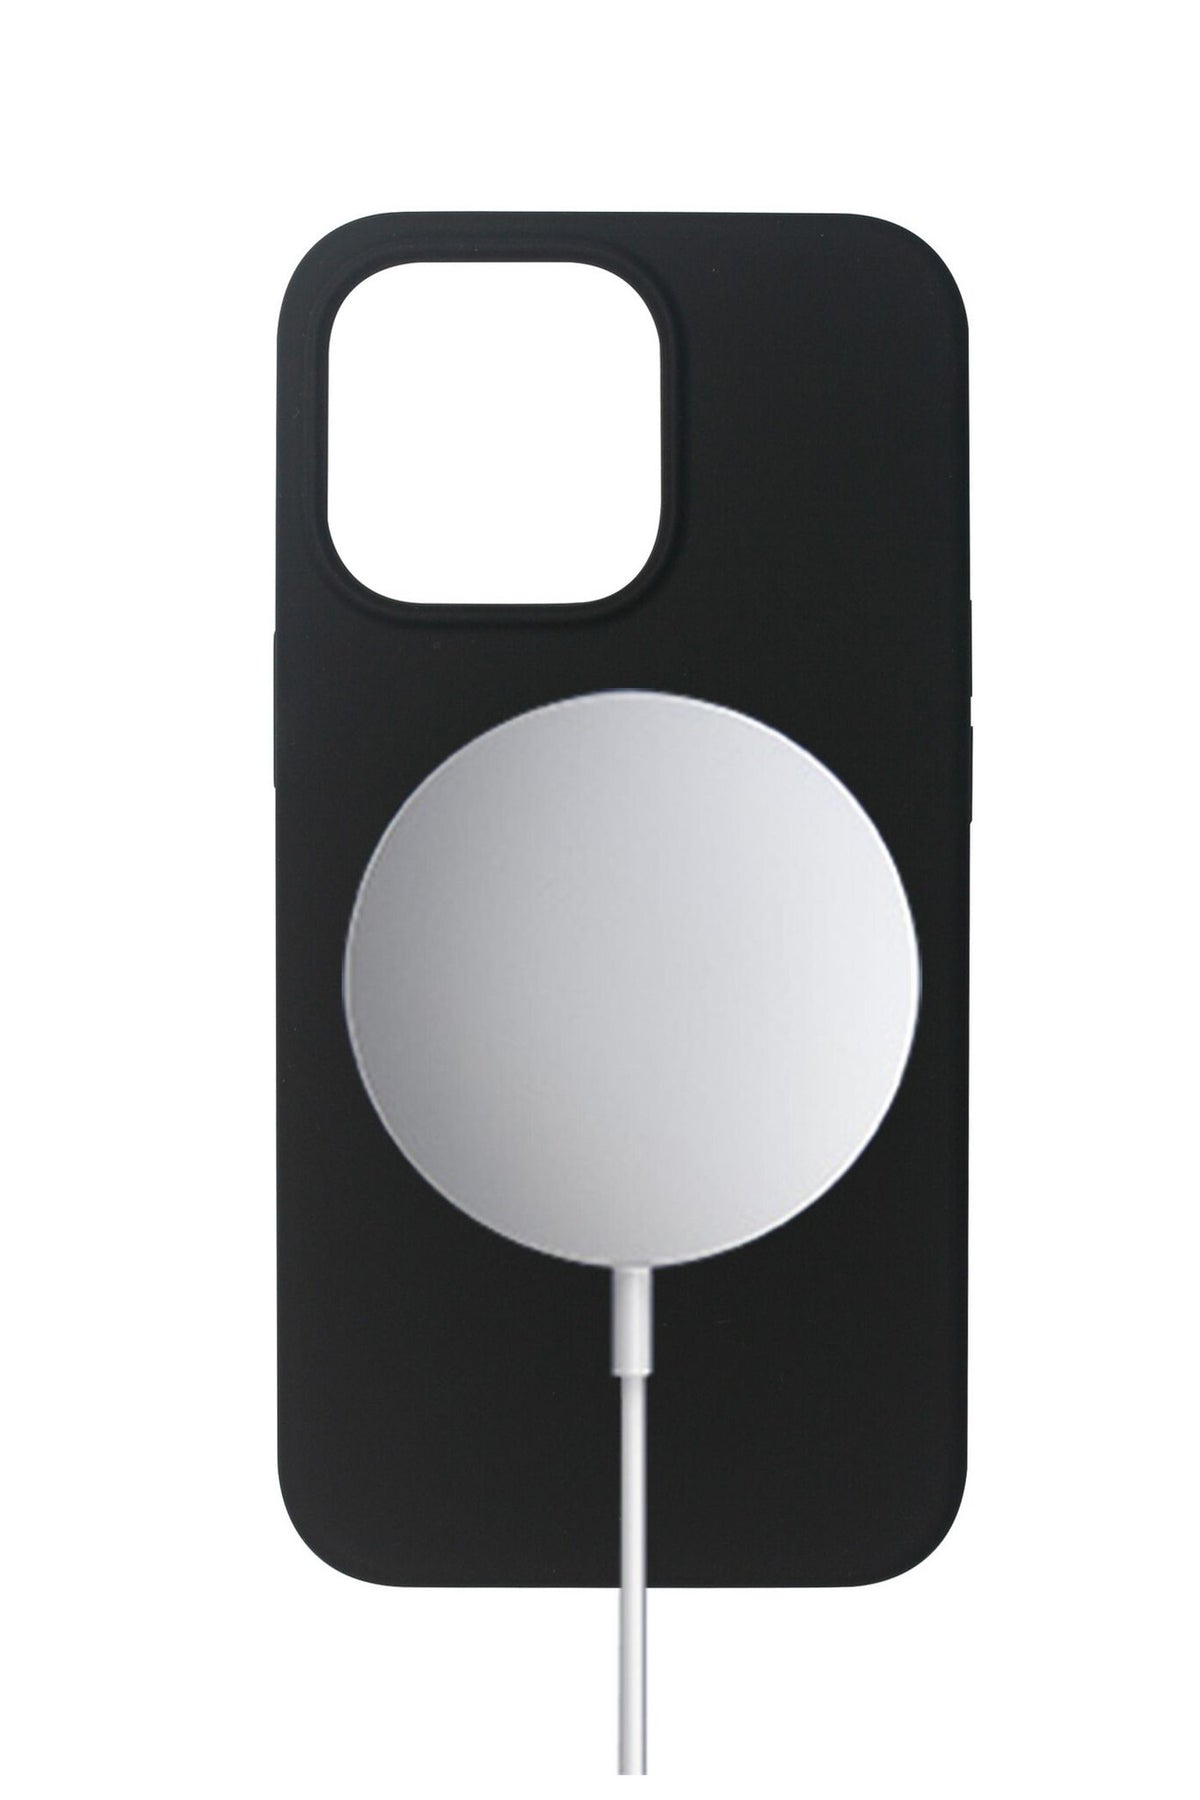 eSTUFF DUBLIN Magnetic mobile phone case for iPhone 13 Pro Max in Black